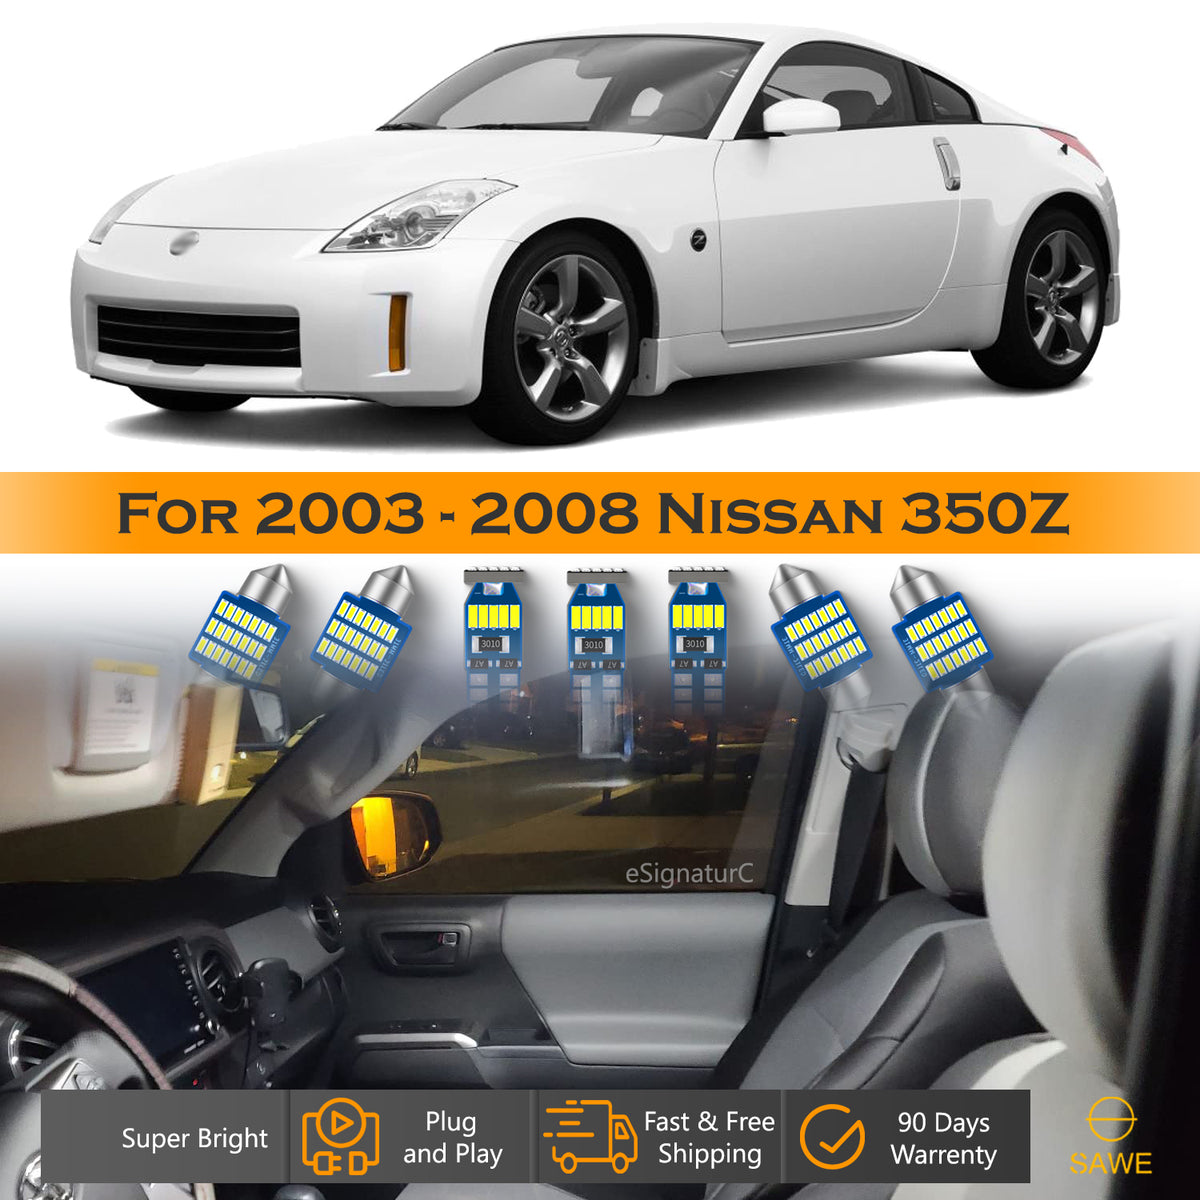 For Nissan 350Z Interior LED Lights - Dome & Map Light Bulbs Package Kit for 2003 - 2008 - White